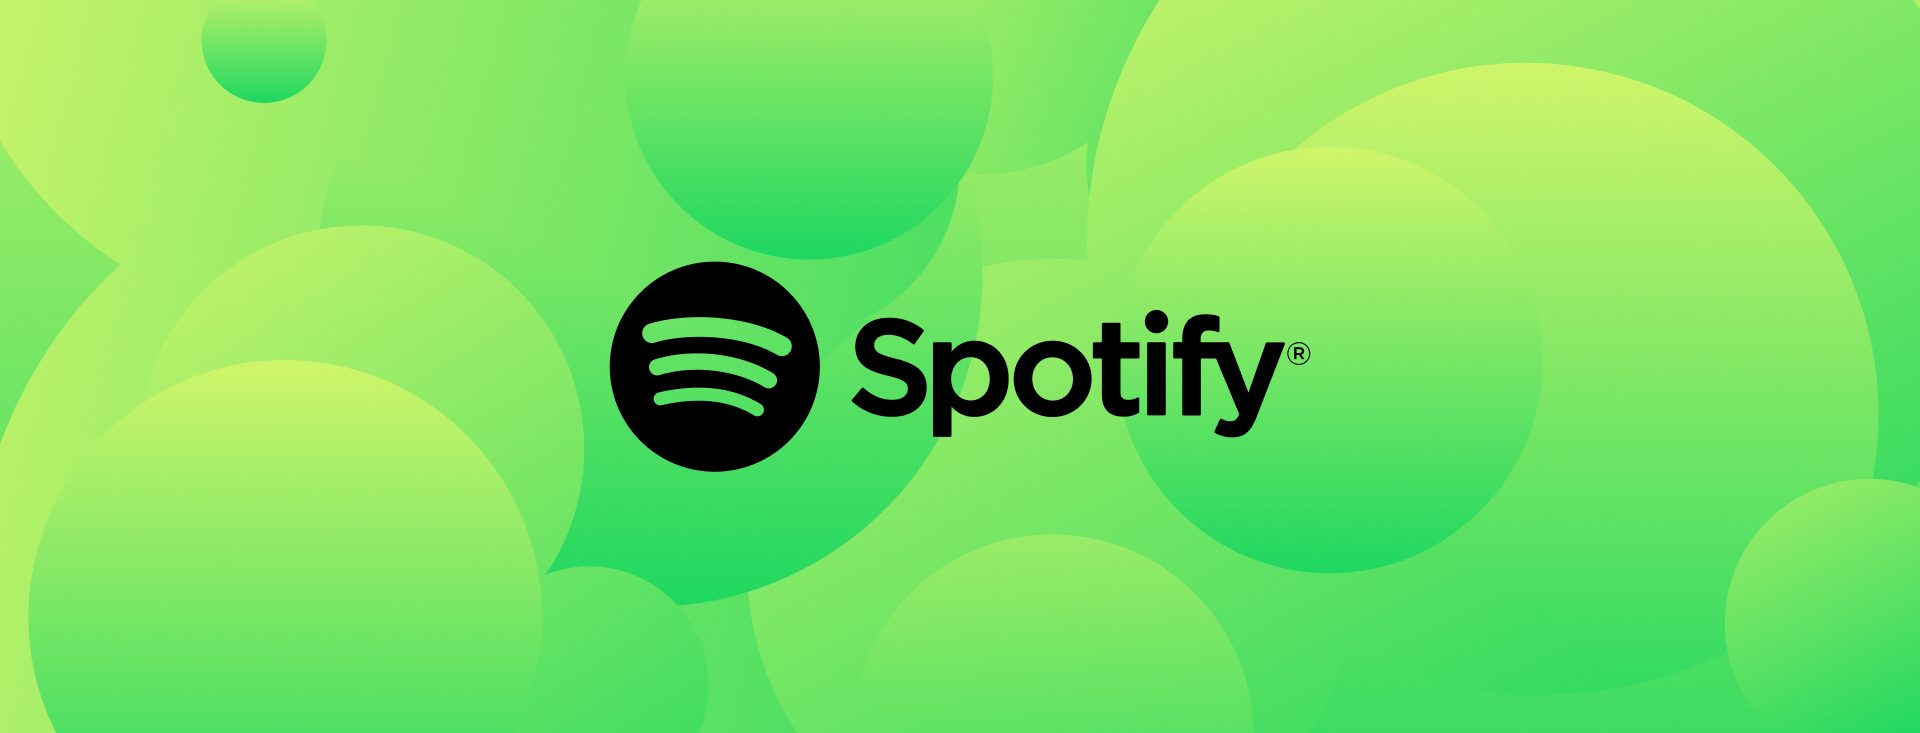 Spotify-logo-ai-example